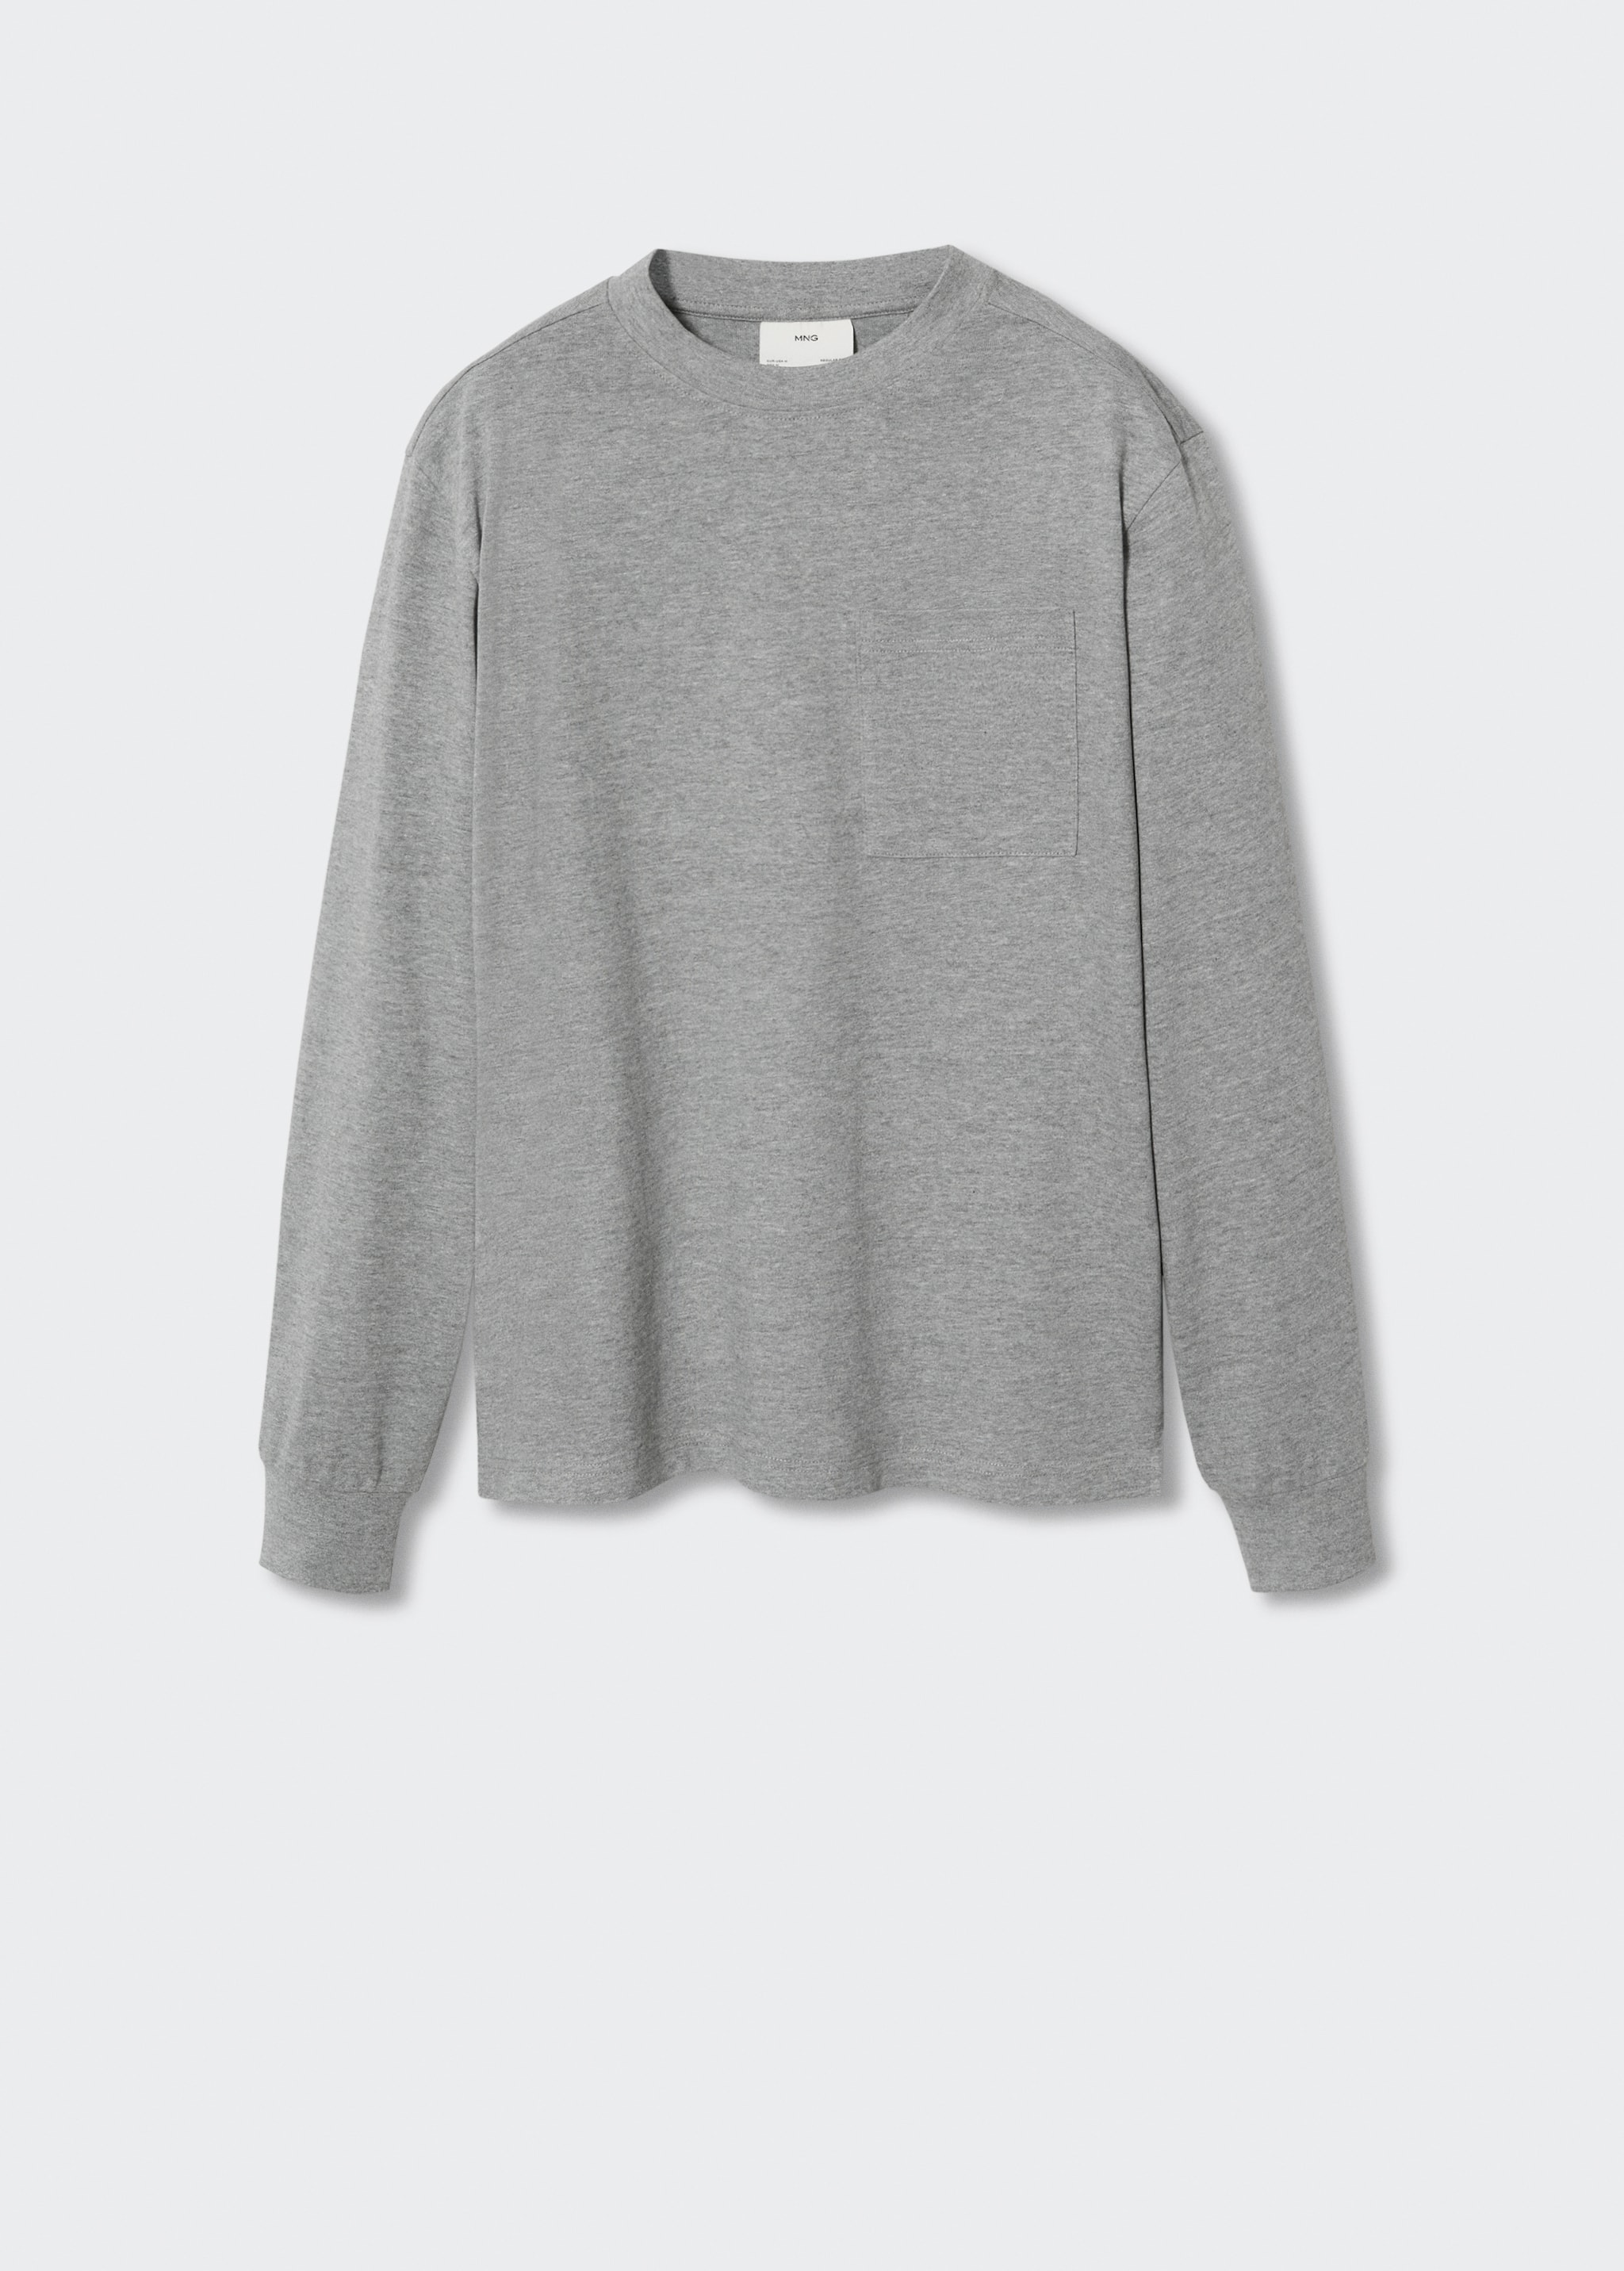 Camiseta algodón manga larga - Artículo sin modelo